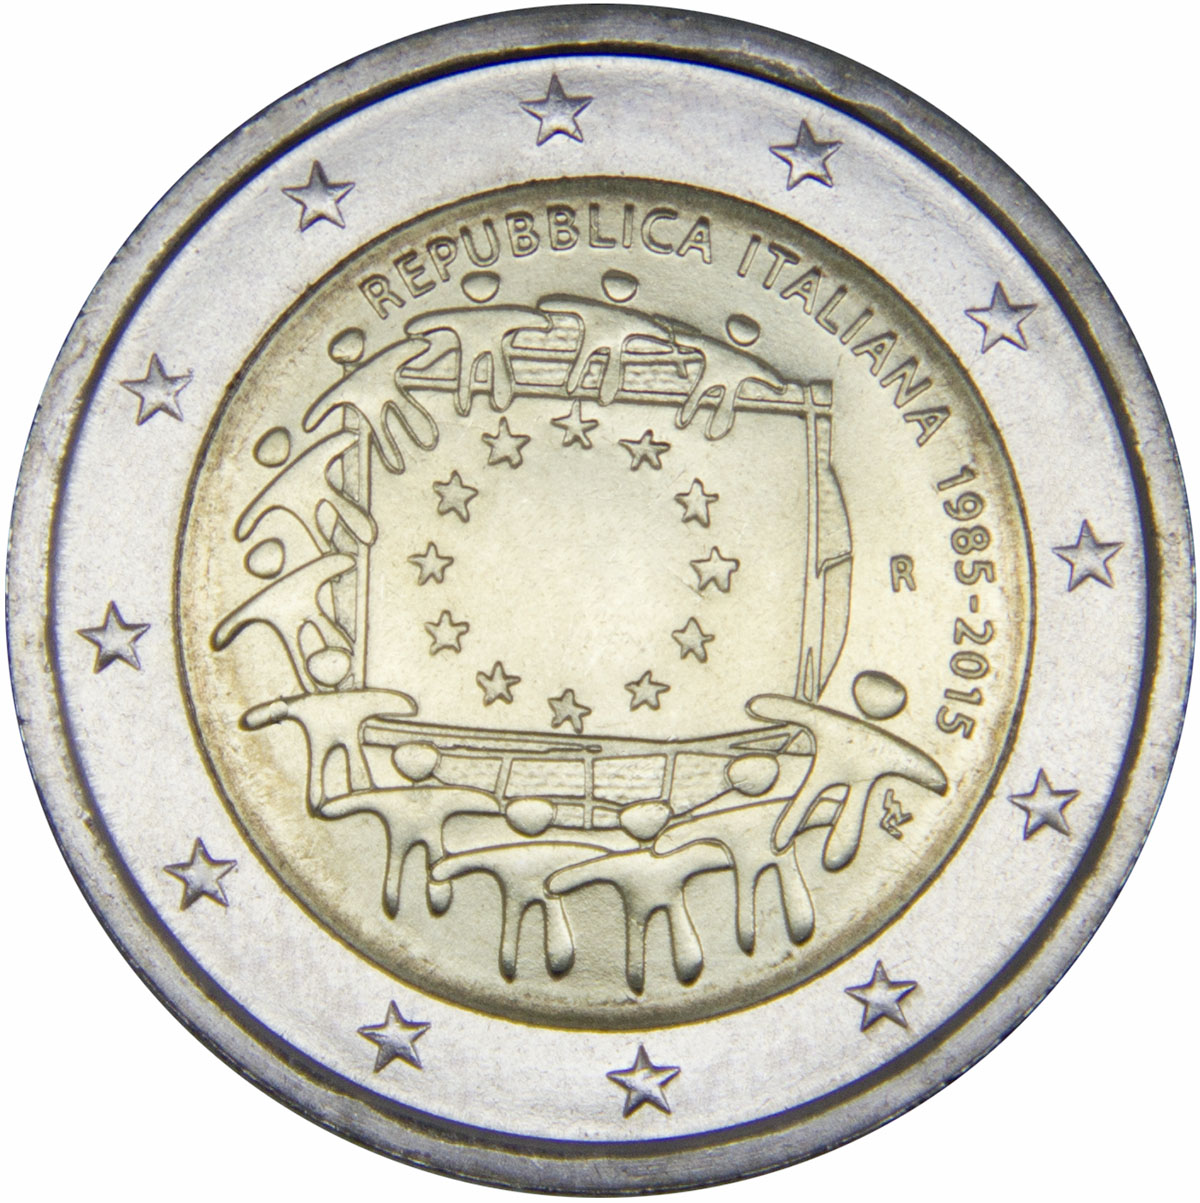 Монета номиналом 9. 2 Евро 2015 - Германия "30 лет флагу". Монеты евро номиналом 2. 2 Евро 2015 ФРГ. Испания монета 2 евро 30 лет флагу ЕС.